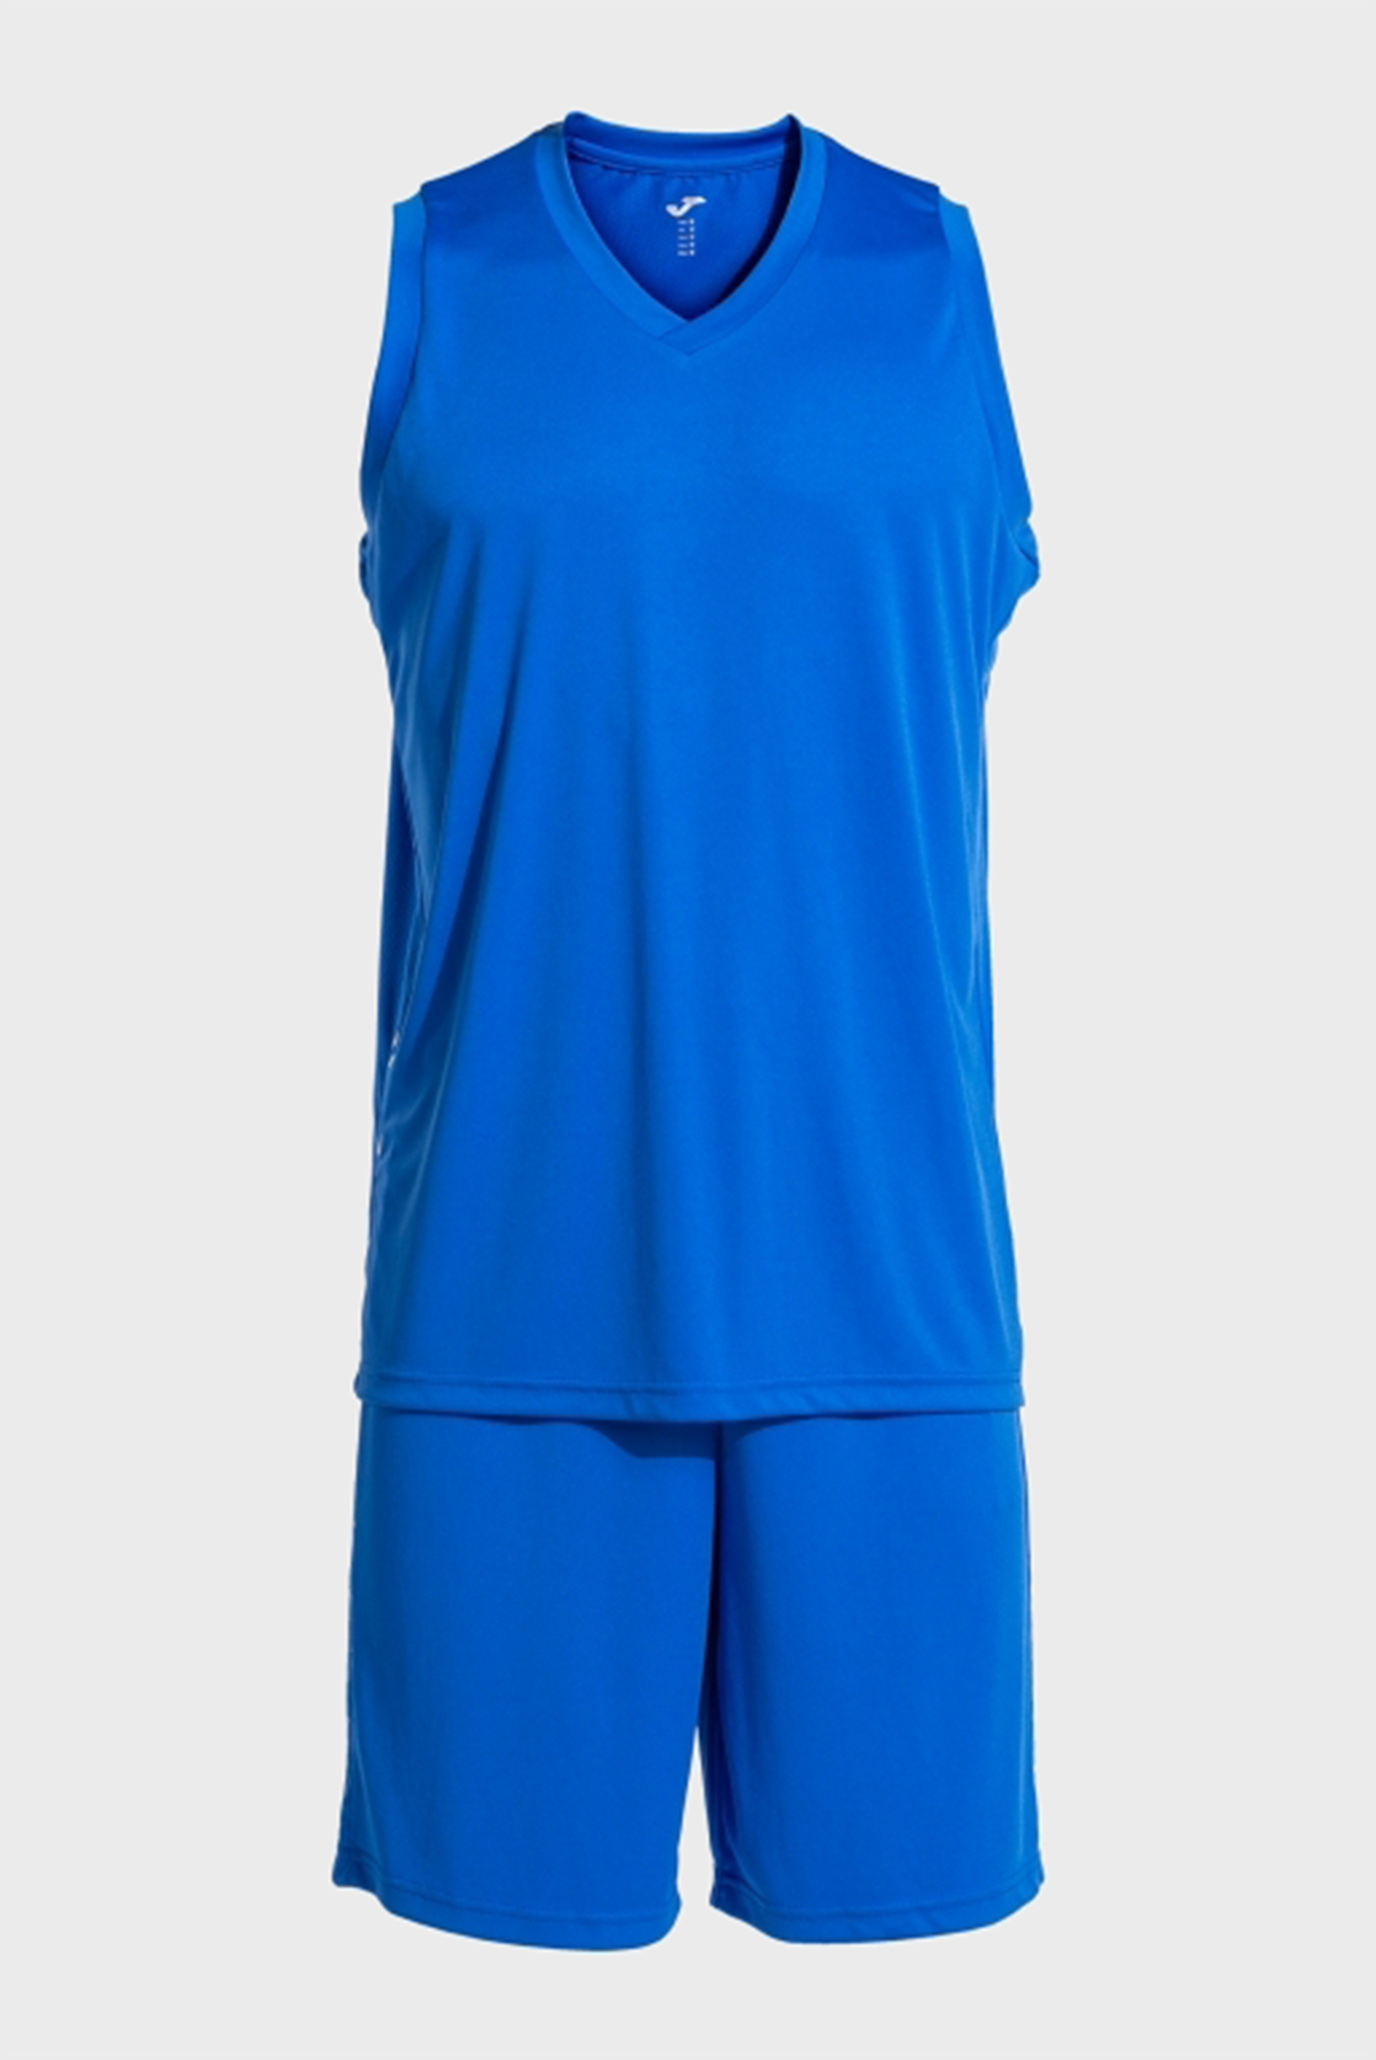 Мужской синий спортивный костюм (майка, шорты) 1